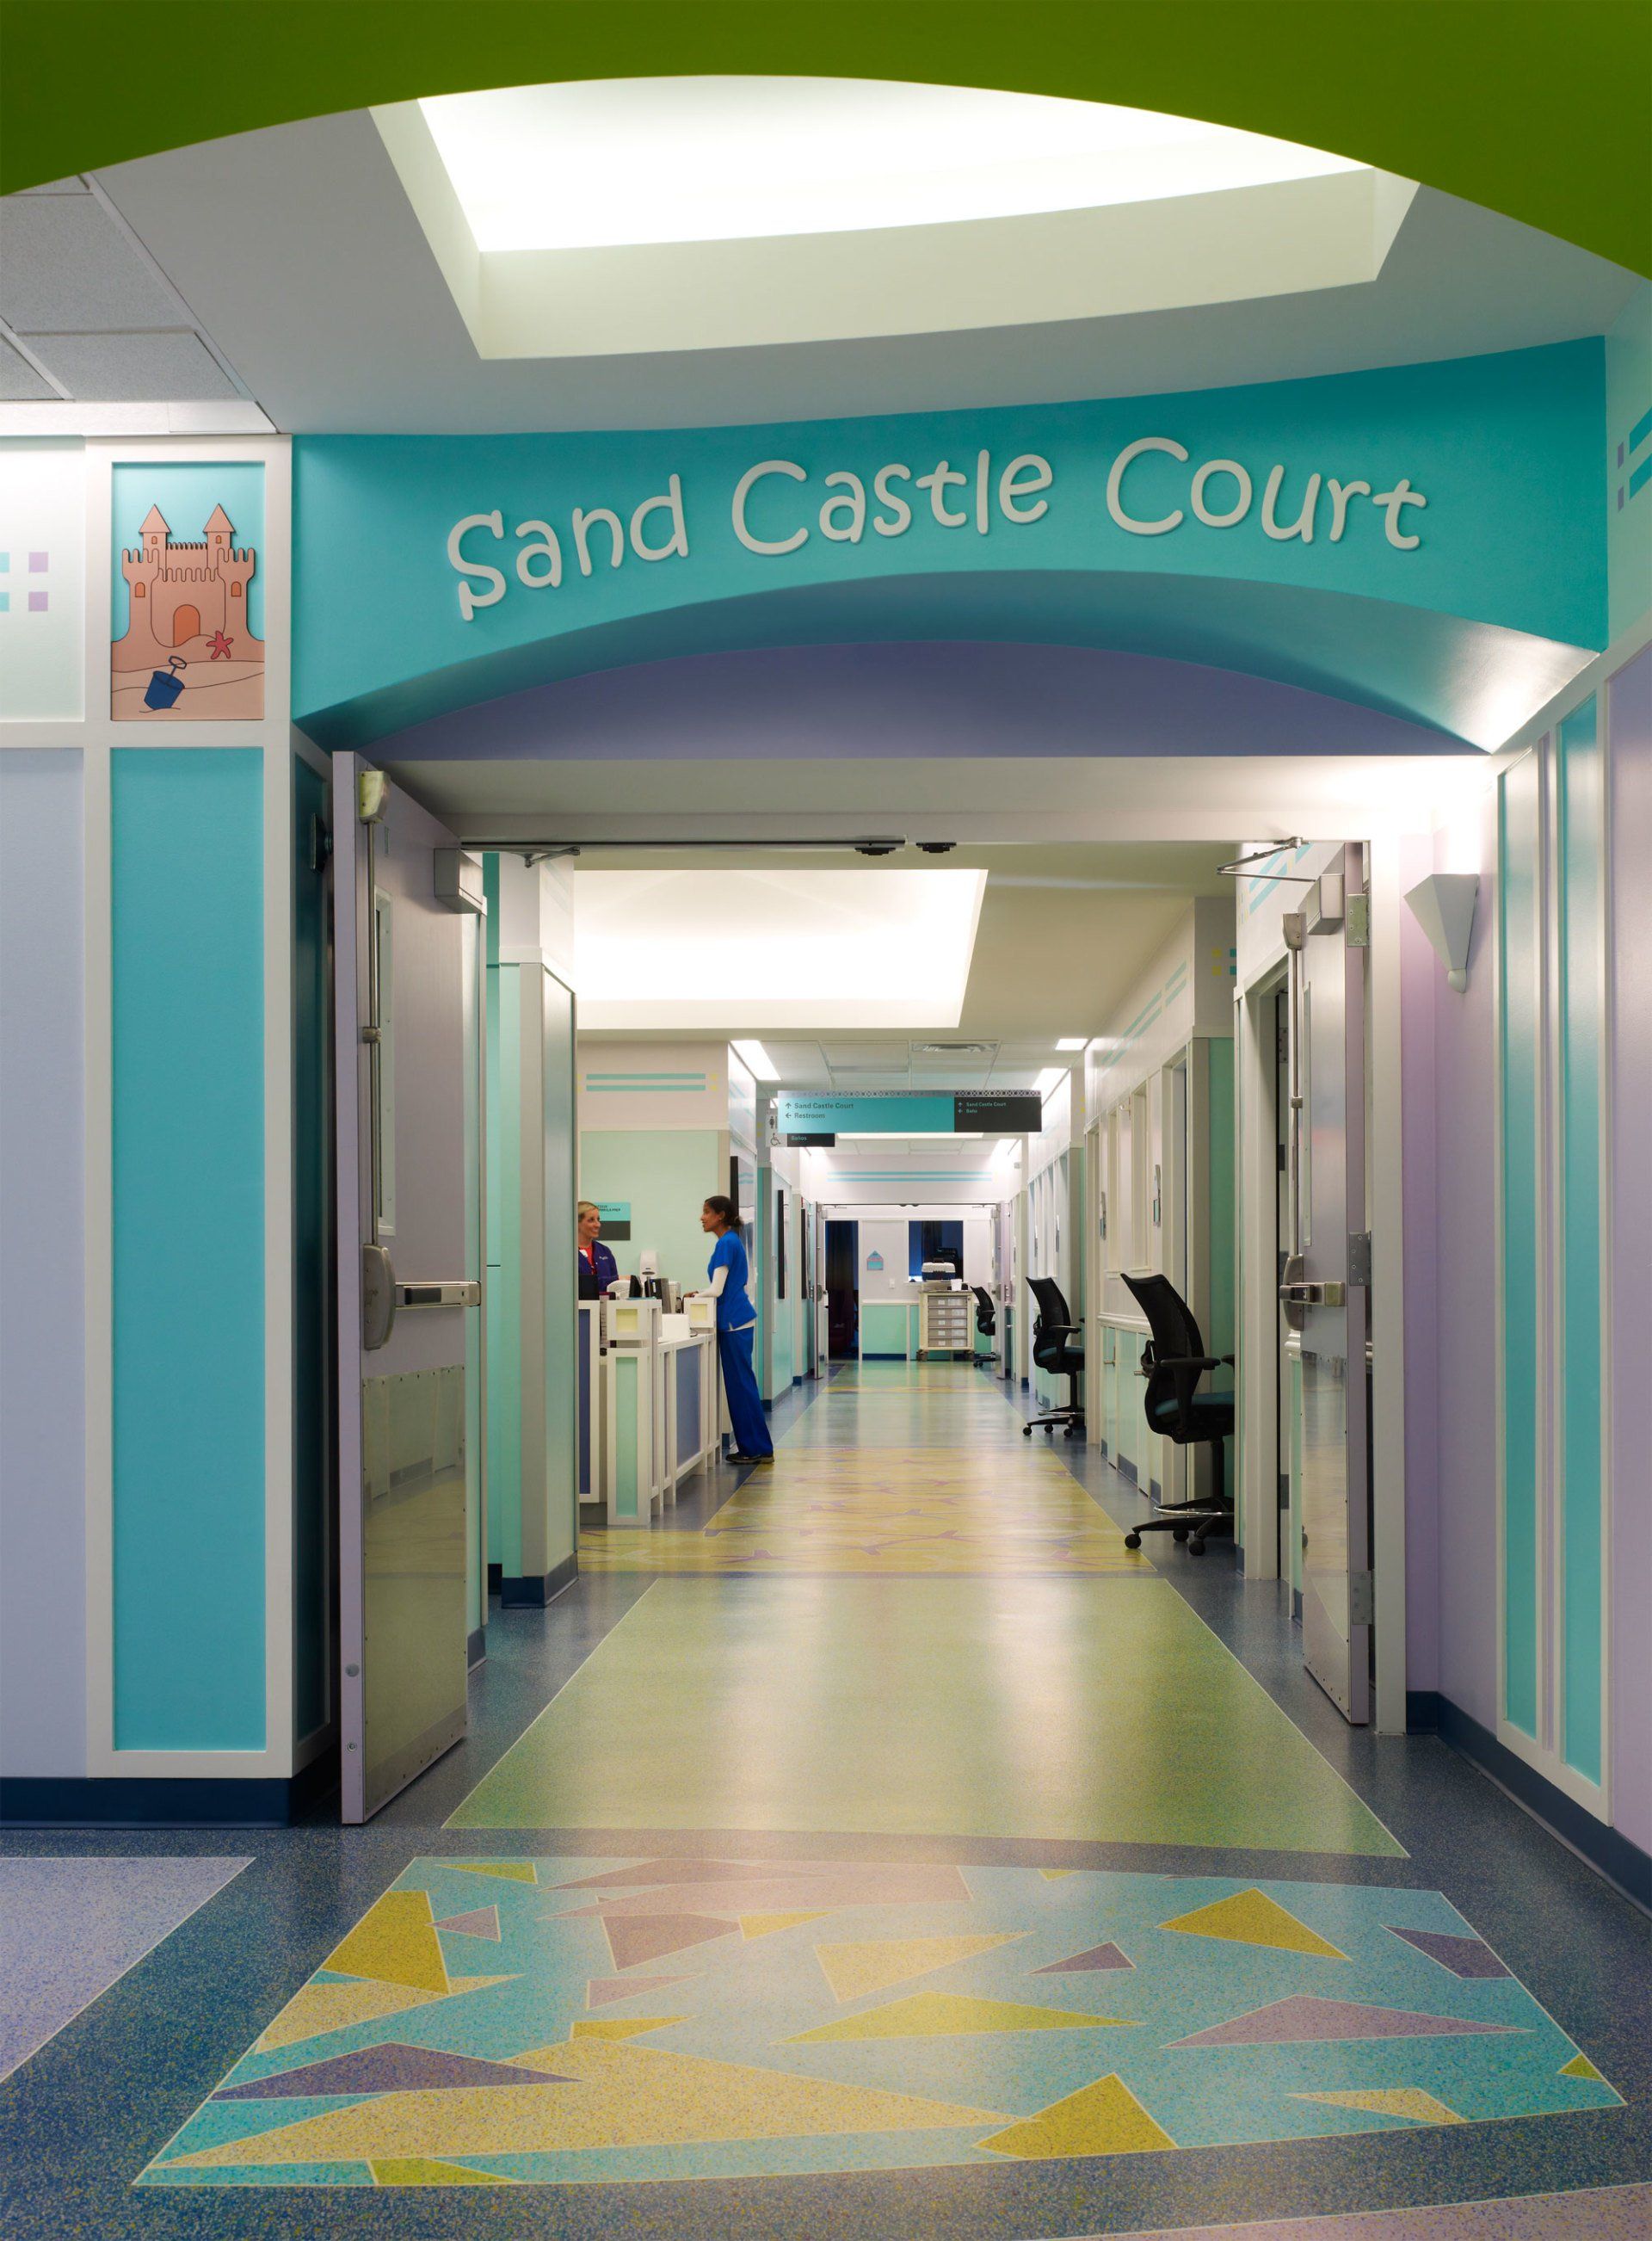 Children's hospital work stations in corridor